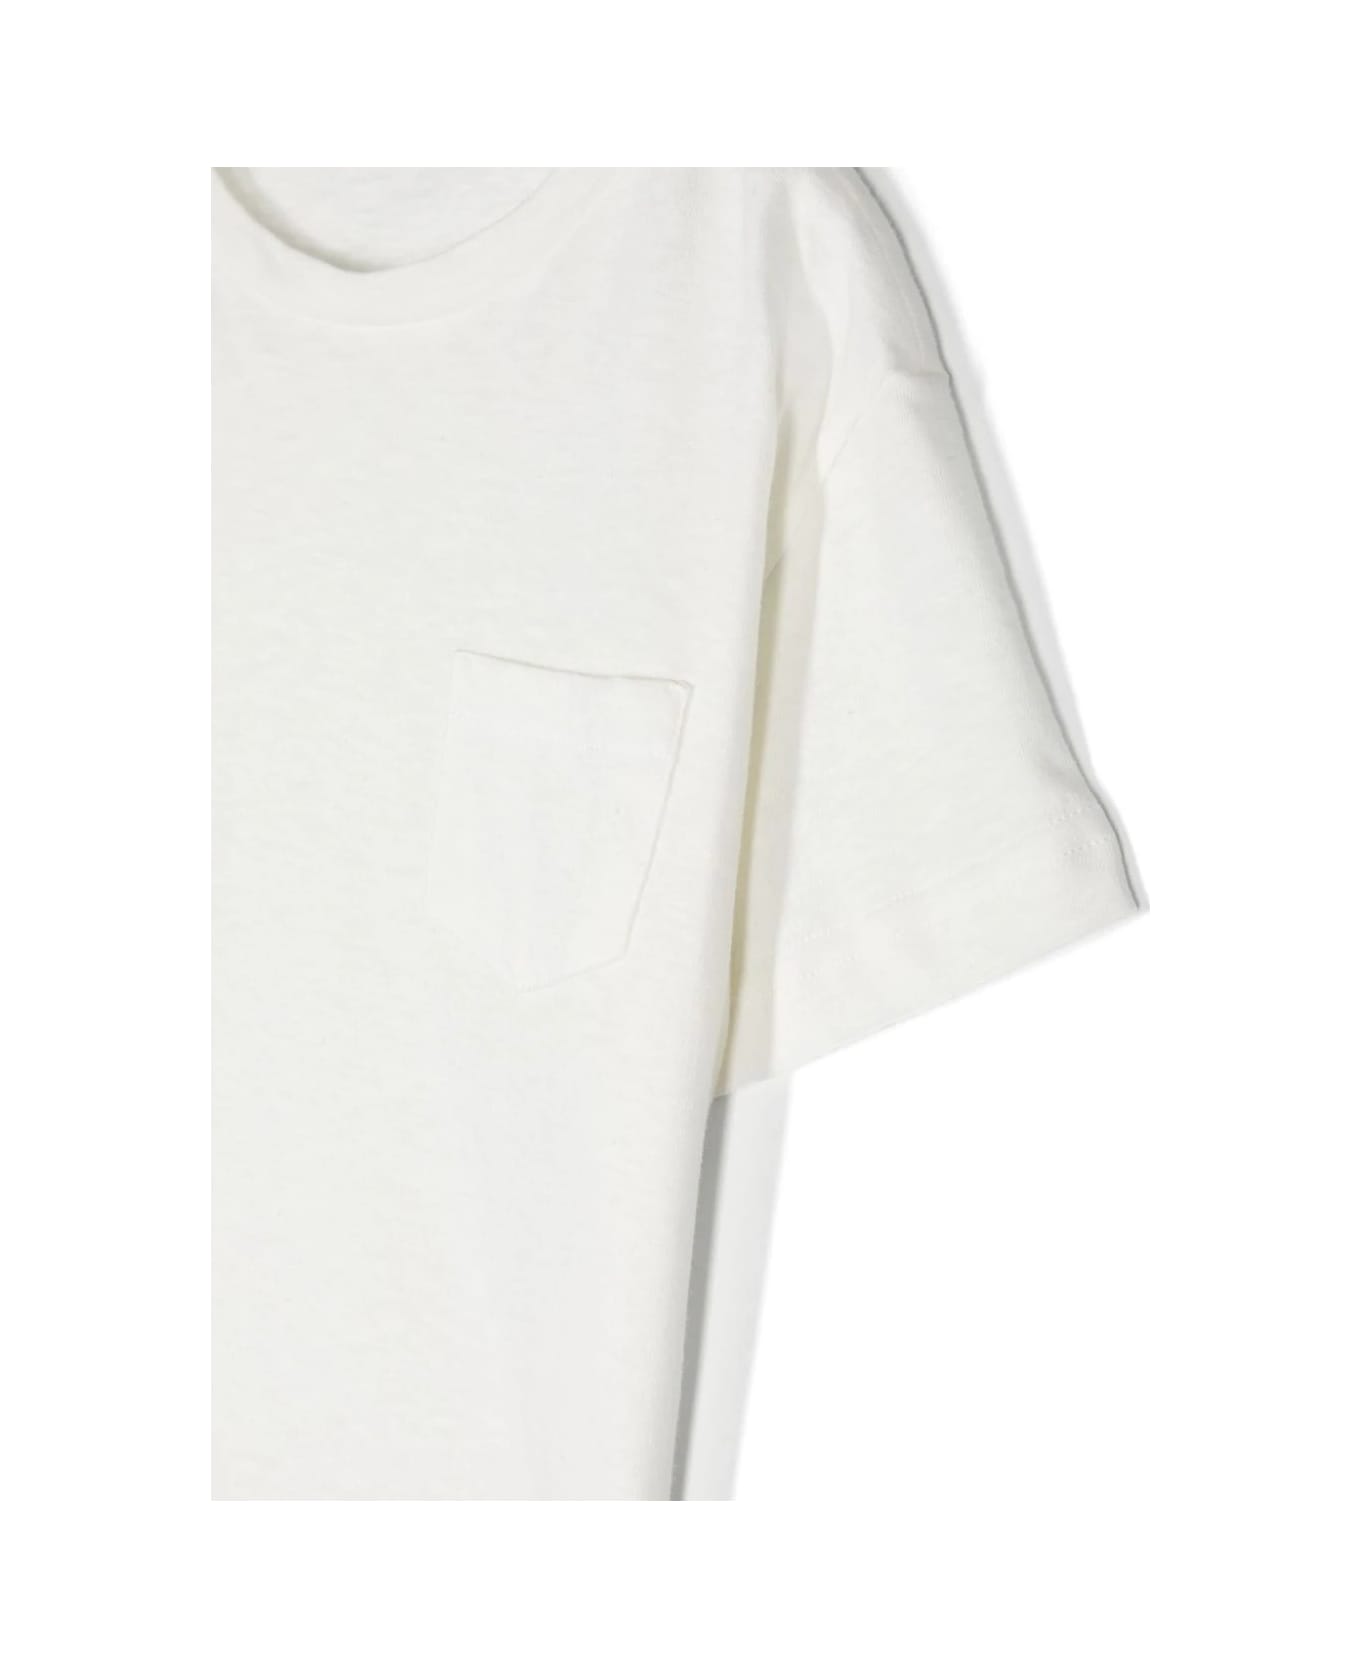 Il Gufo White Cotton And Linen T-shirt - Latte